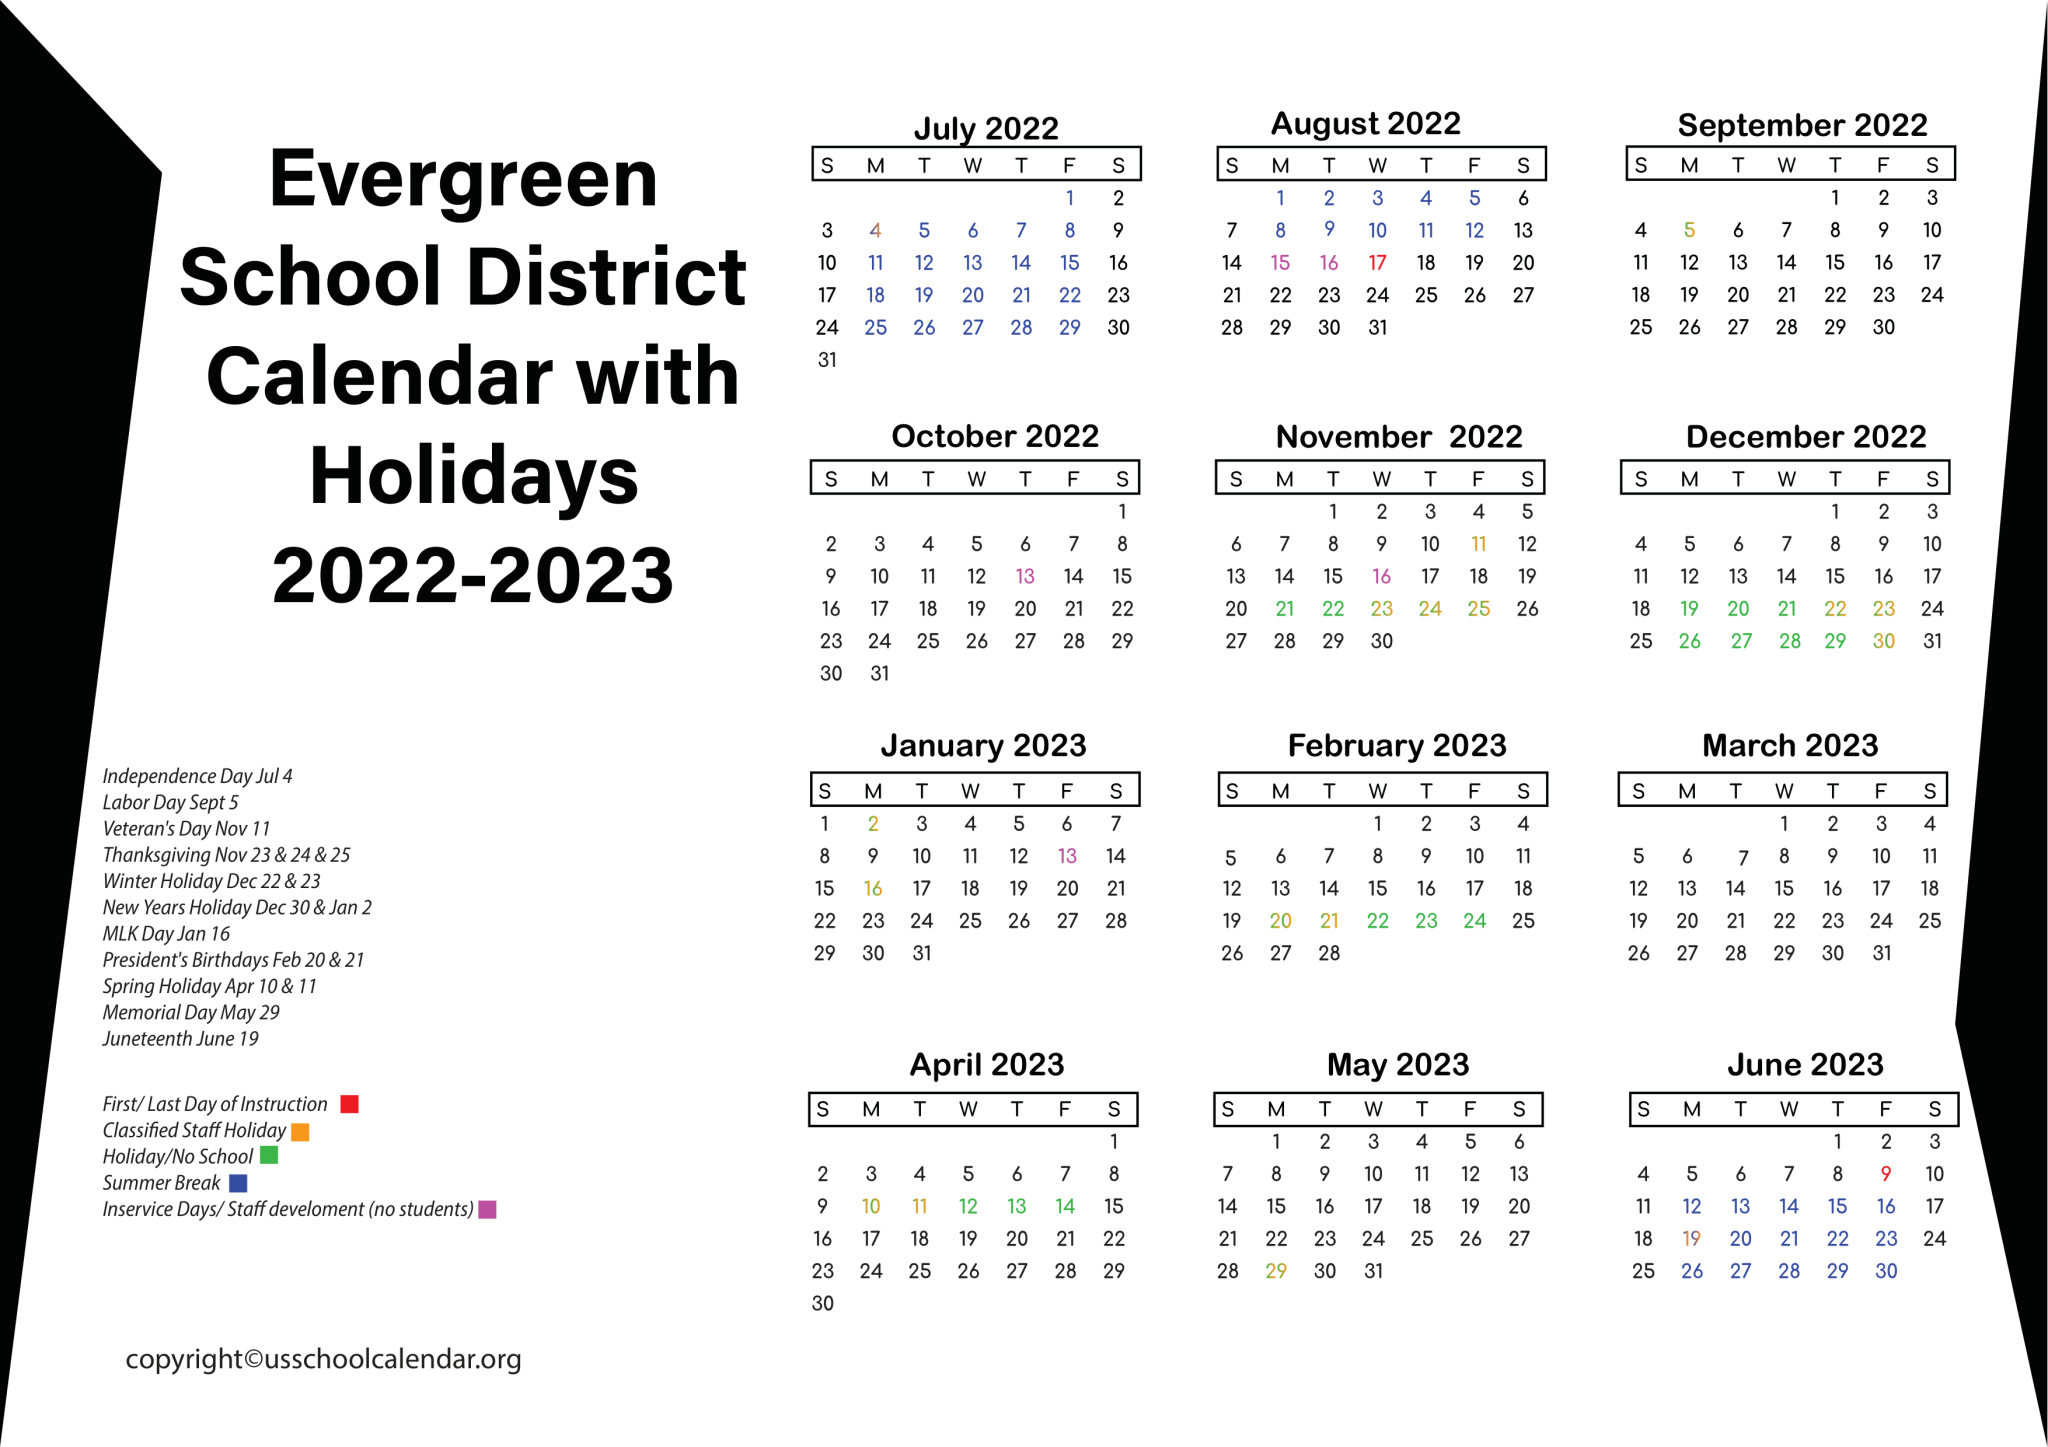 evergreen-school-district-calendar-with-holidays-2022-2023